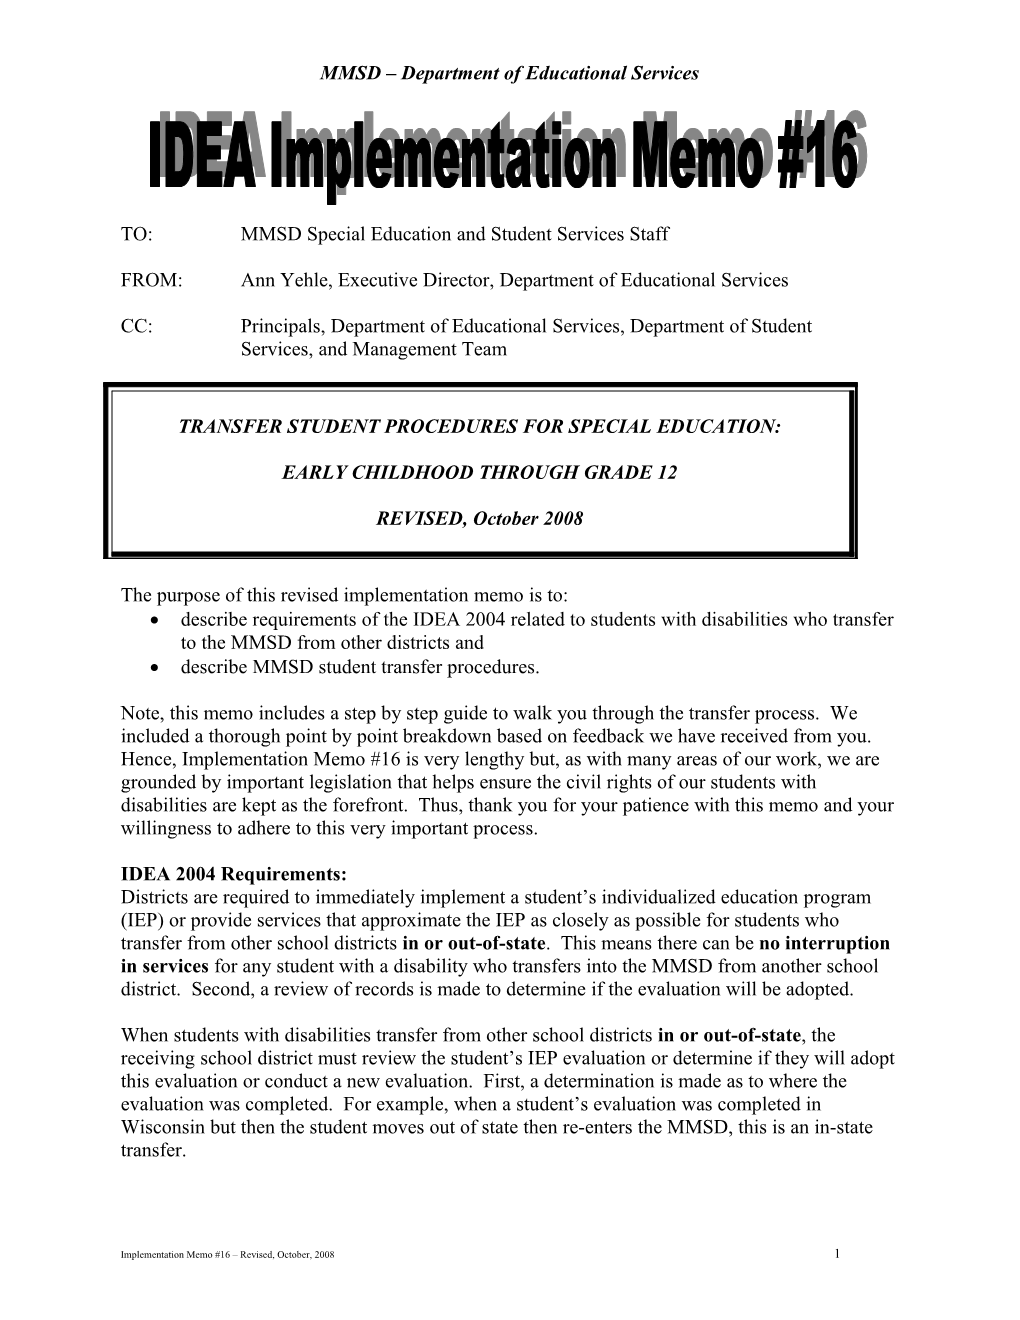 Implementation Memo #16 - Revised, October 2008